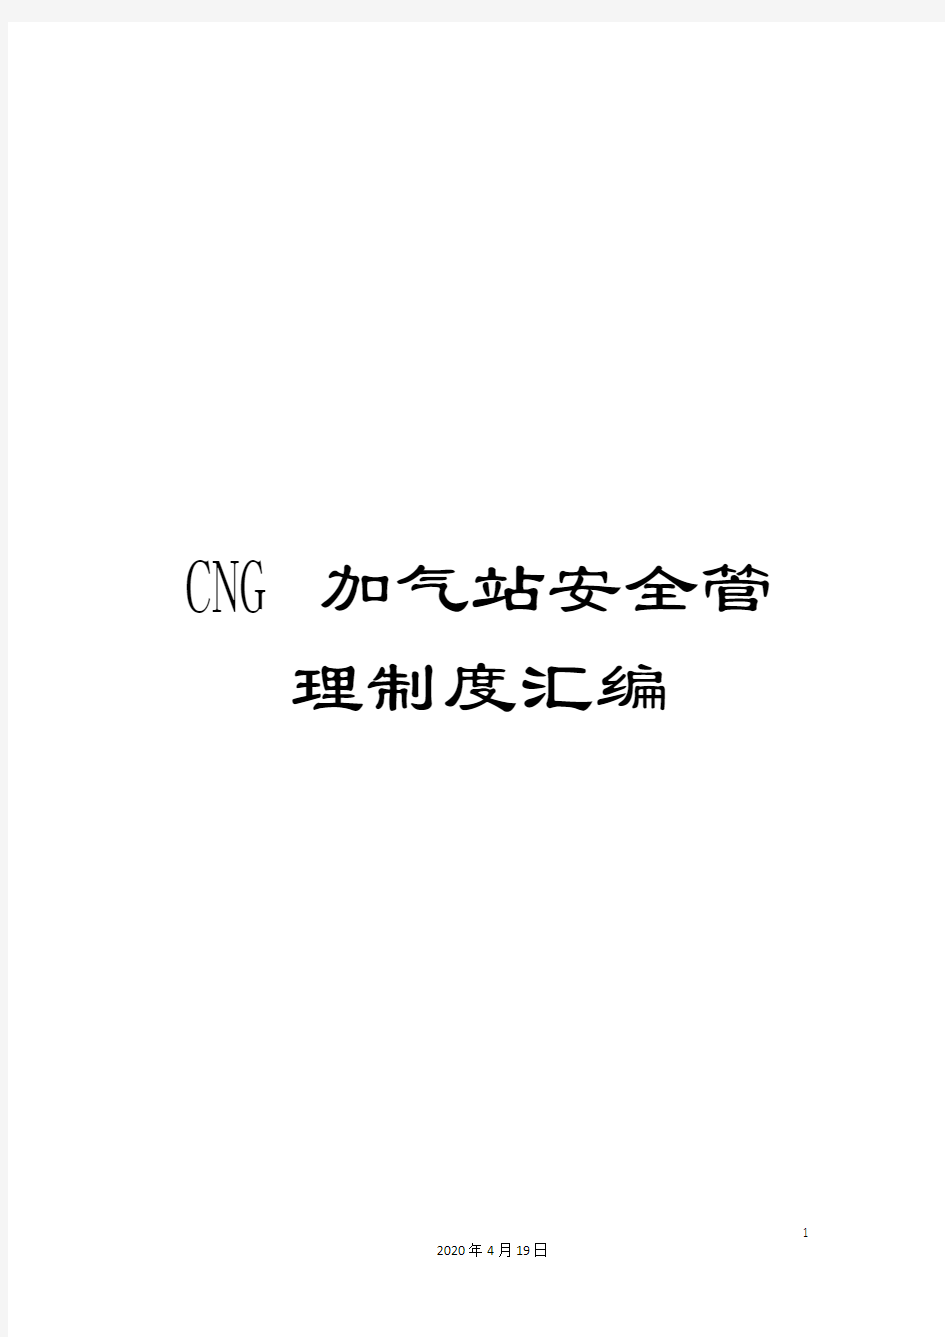 CNG加气站安全管理制度汇编